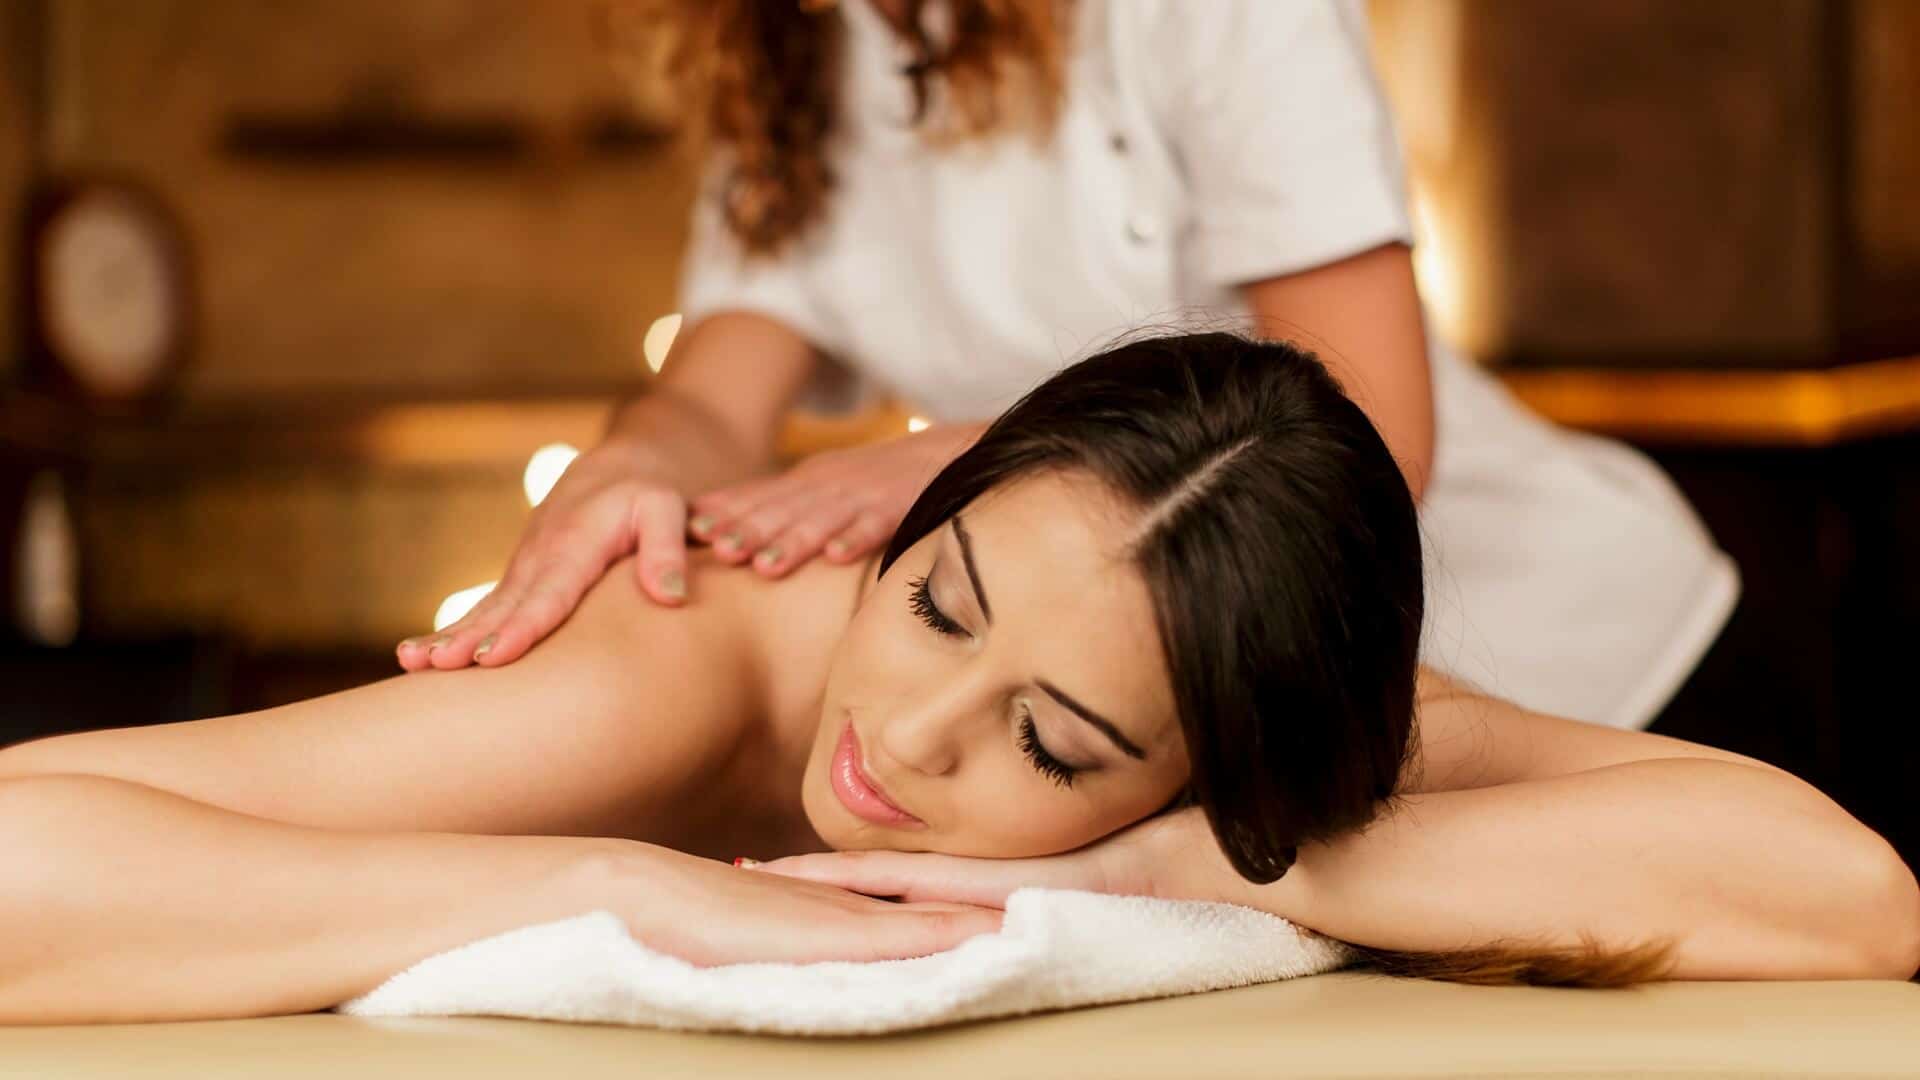 daniel frimpong share sensual massage winston salem photos